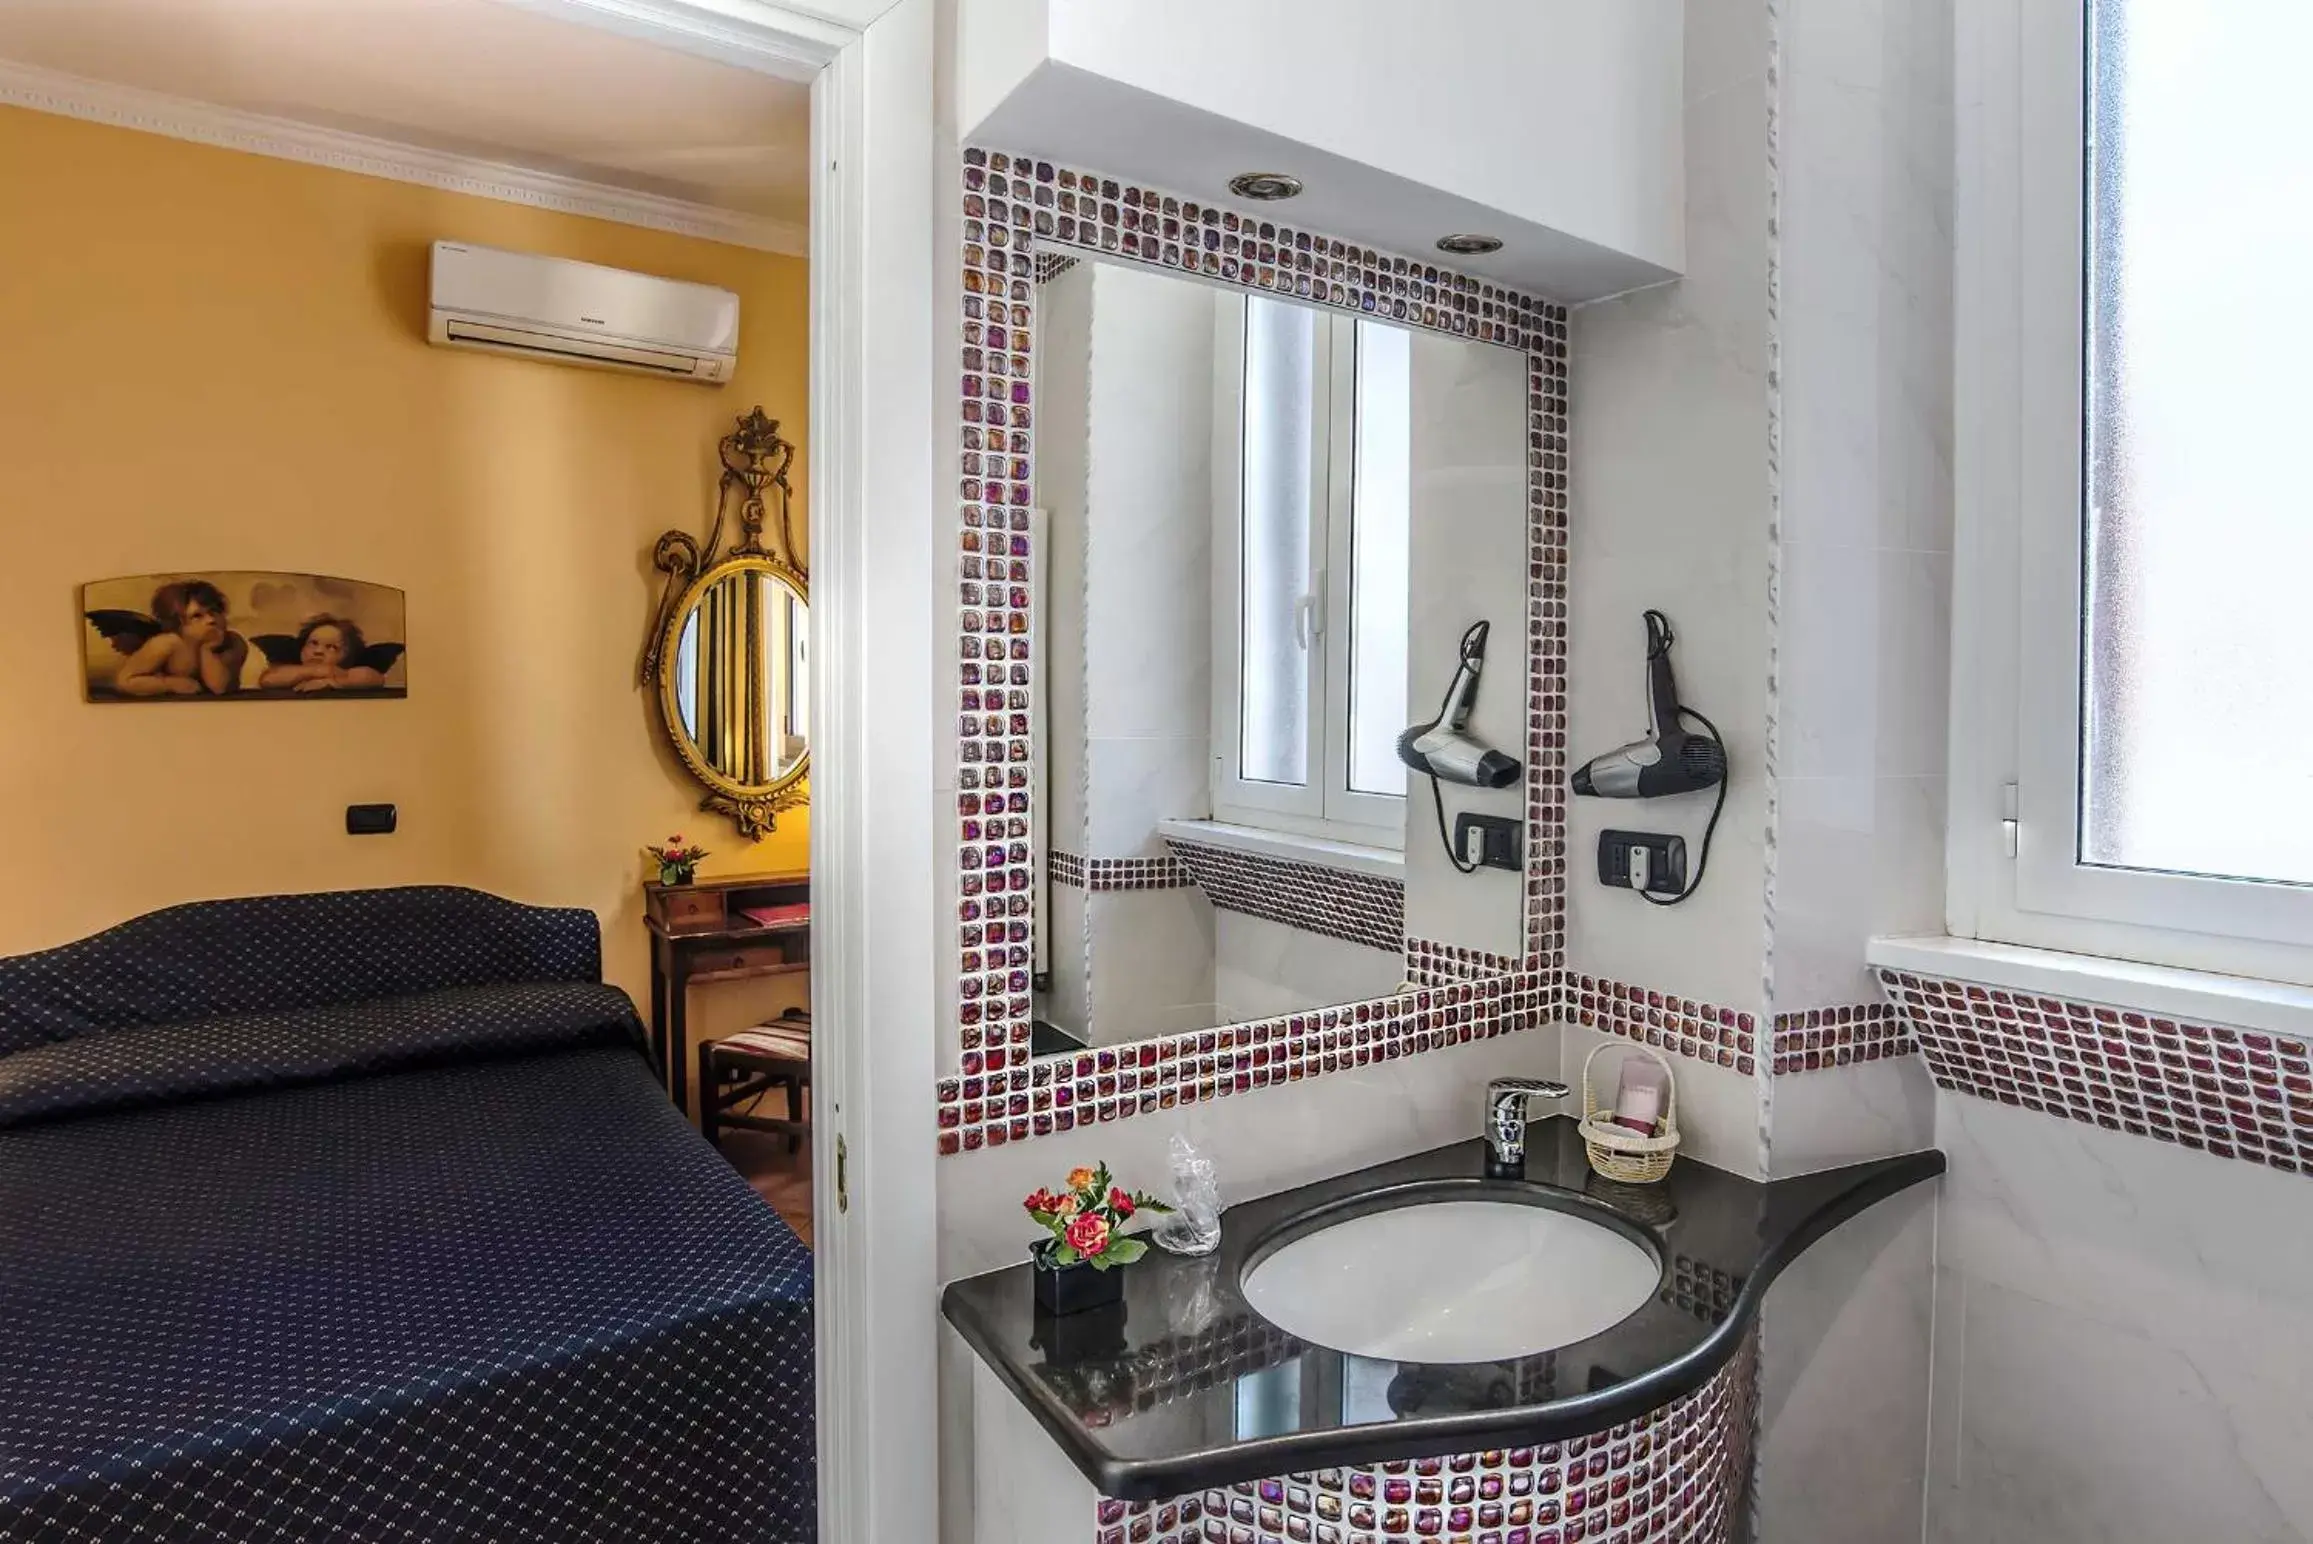 Photo of the whole room, Bathroom in Hotel Caracciolo